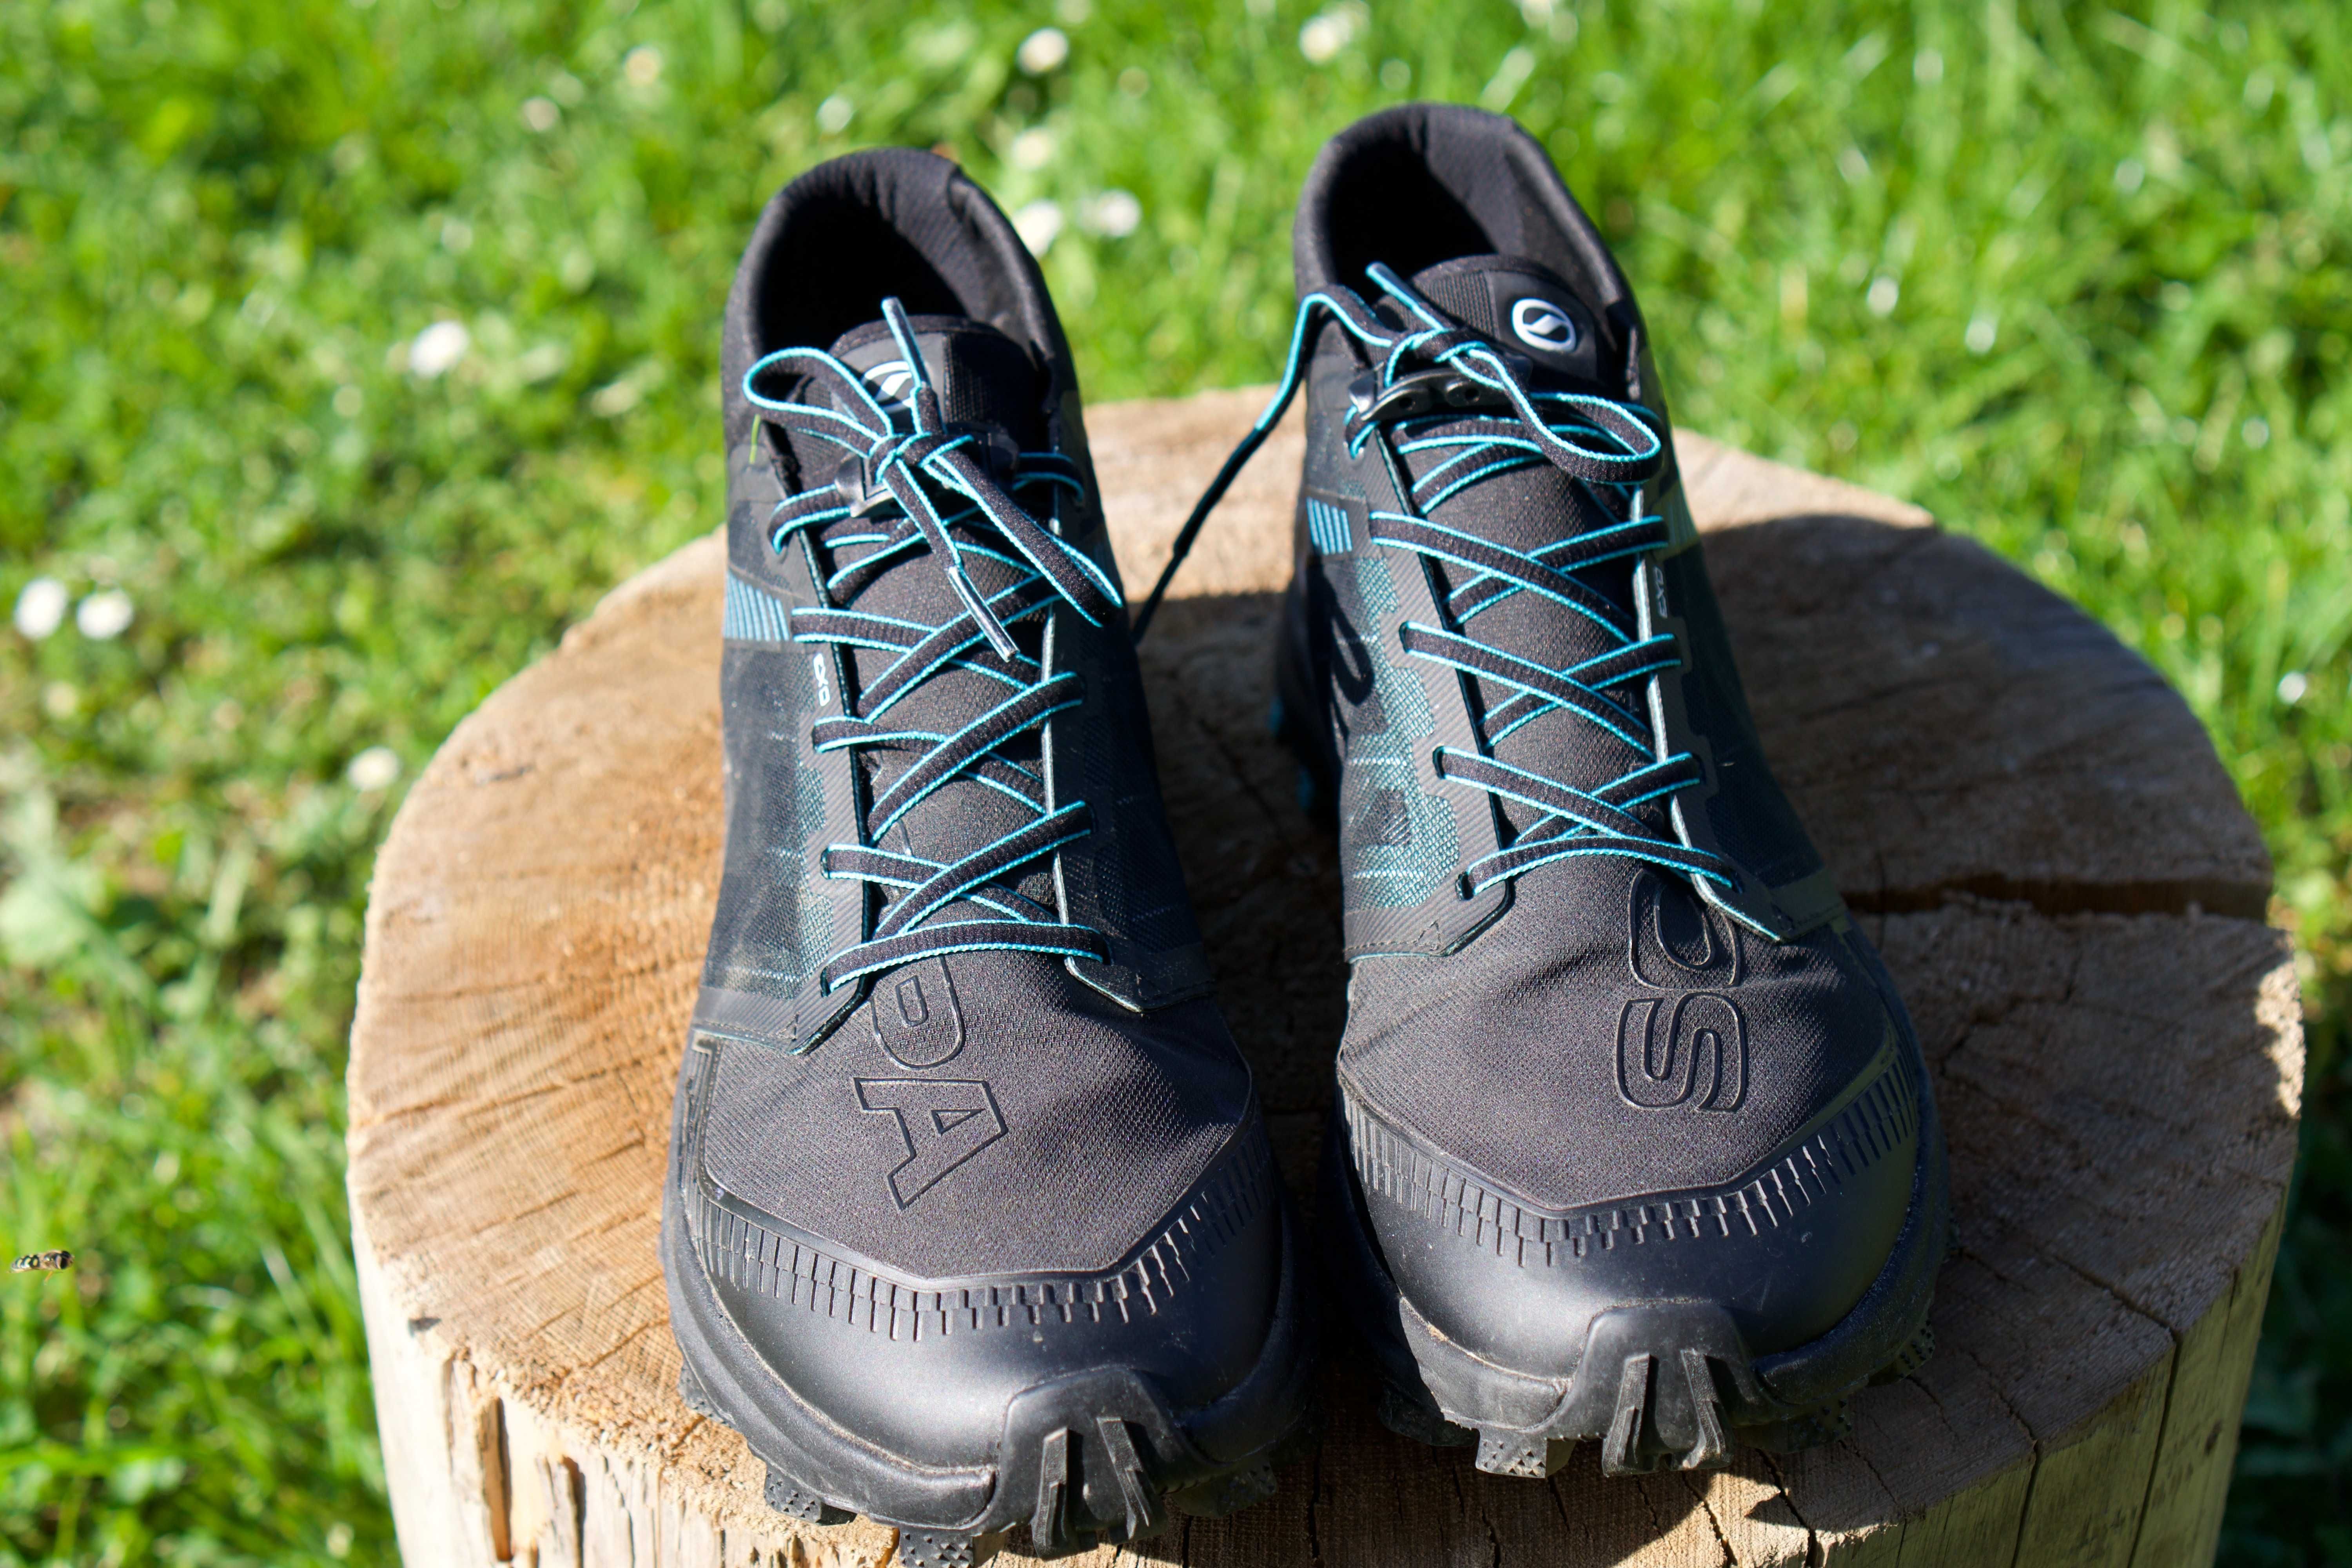 SCARPA Spin ST - Trail running shoes, marimea 45, purtati 5 km